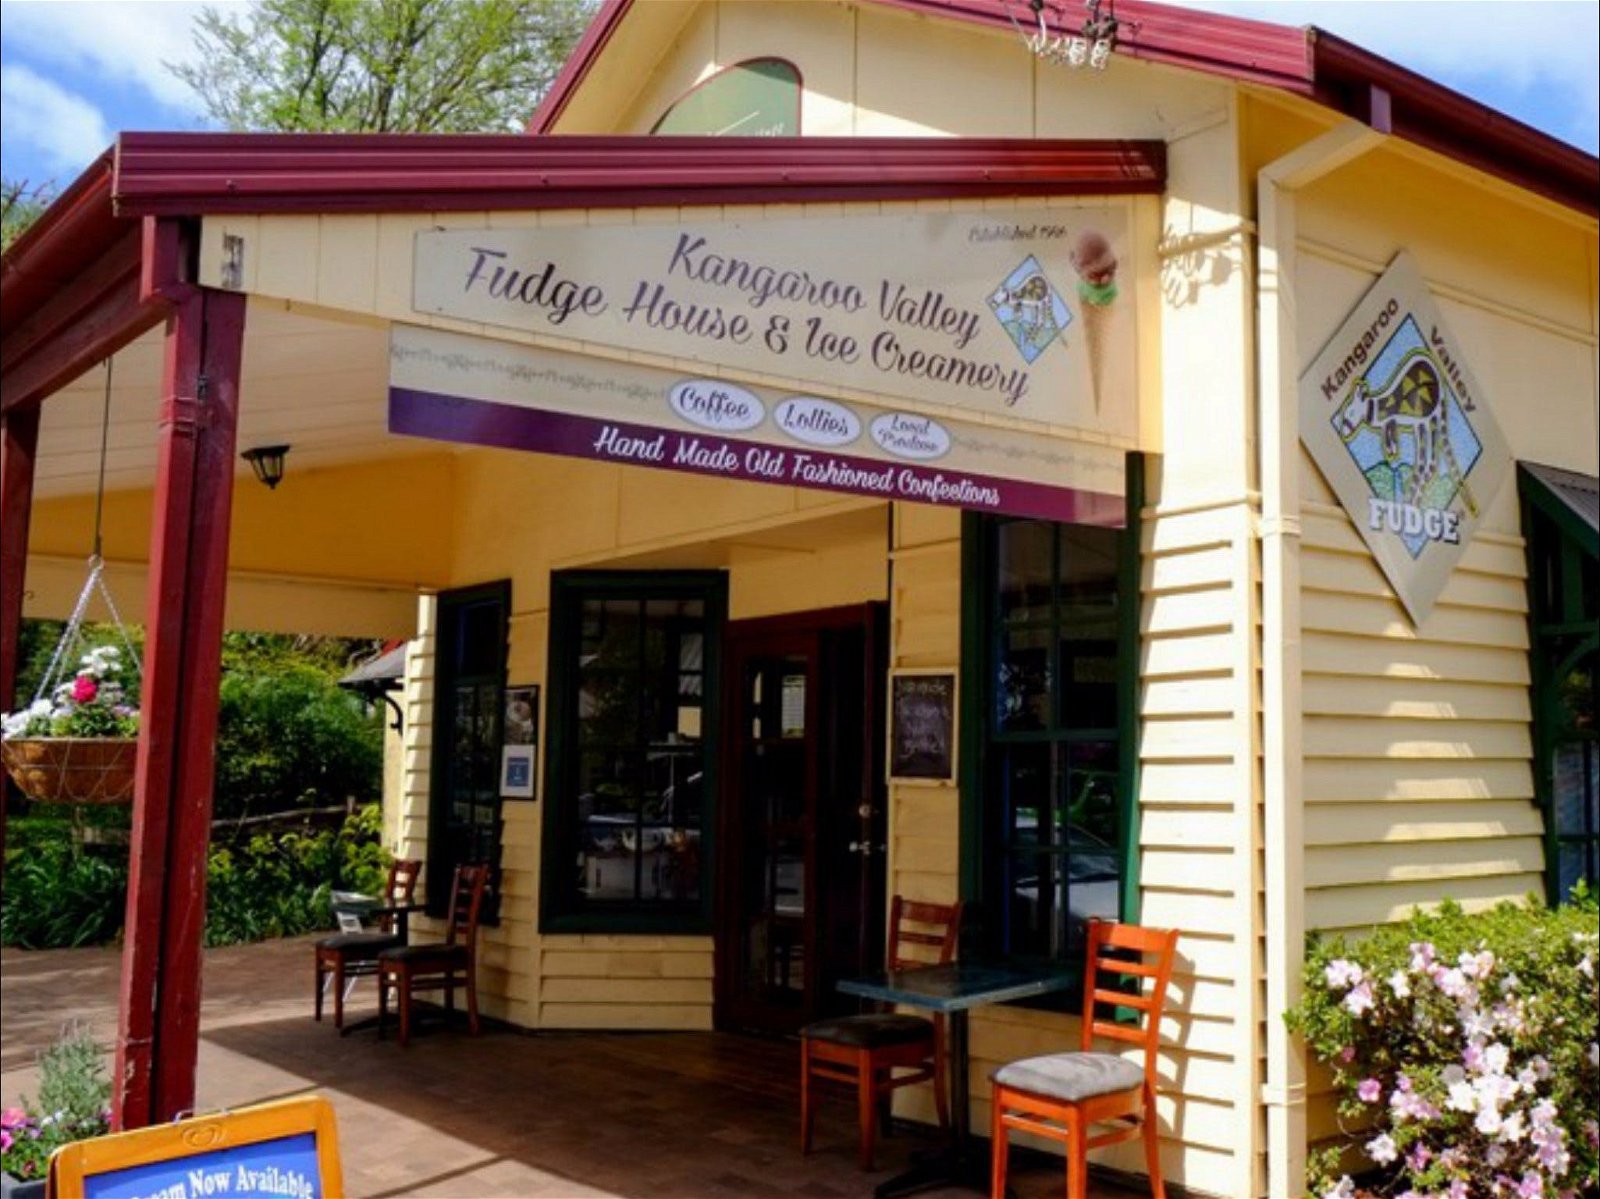 Kangaroo Valley Fudge House and Ice Creamery - Tourism Gold Coast